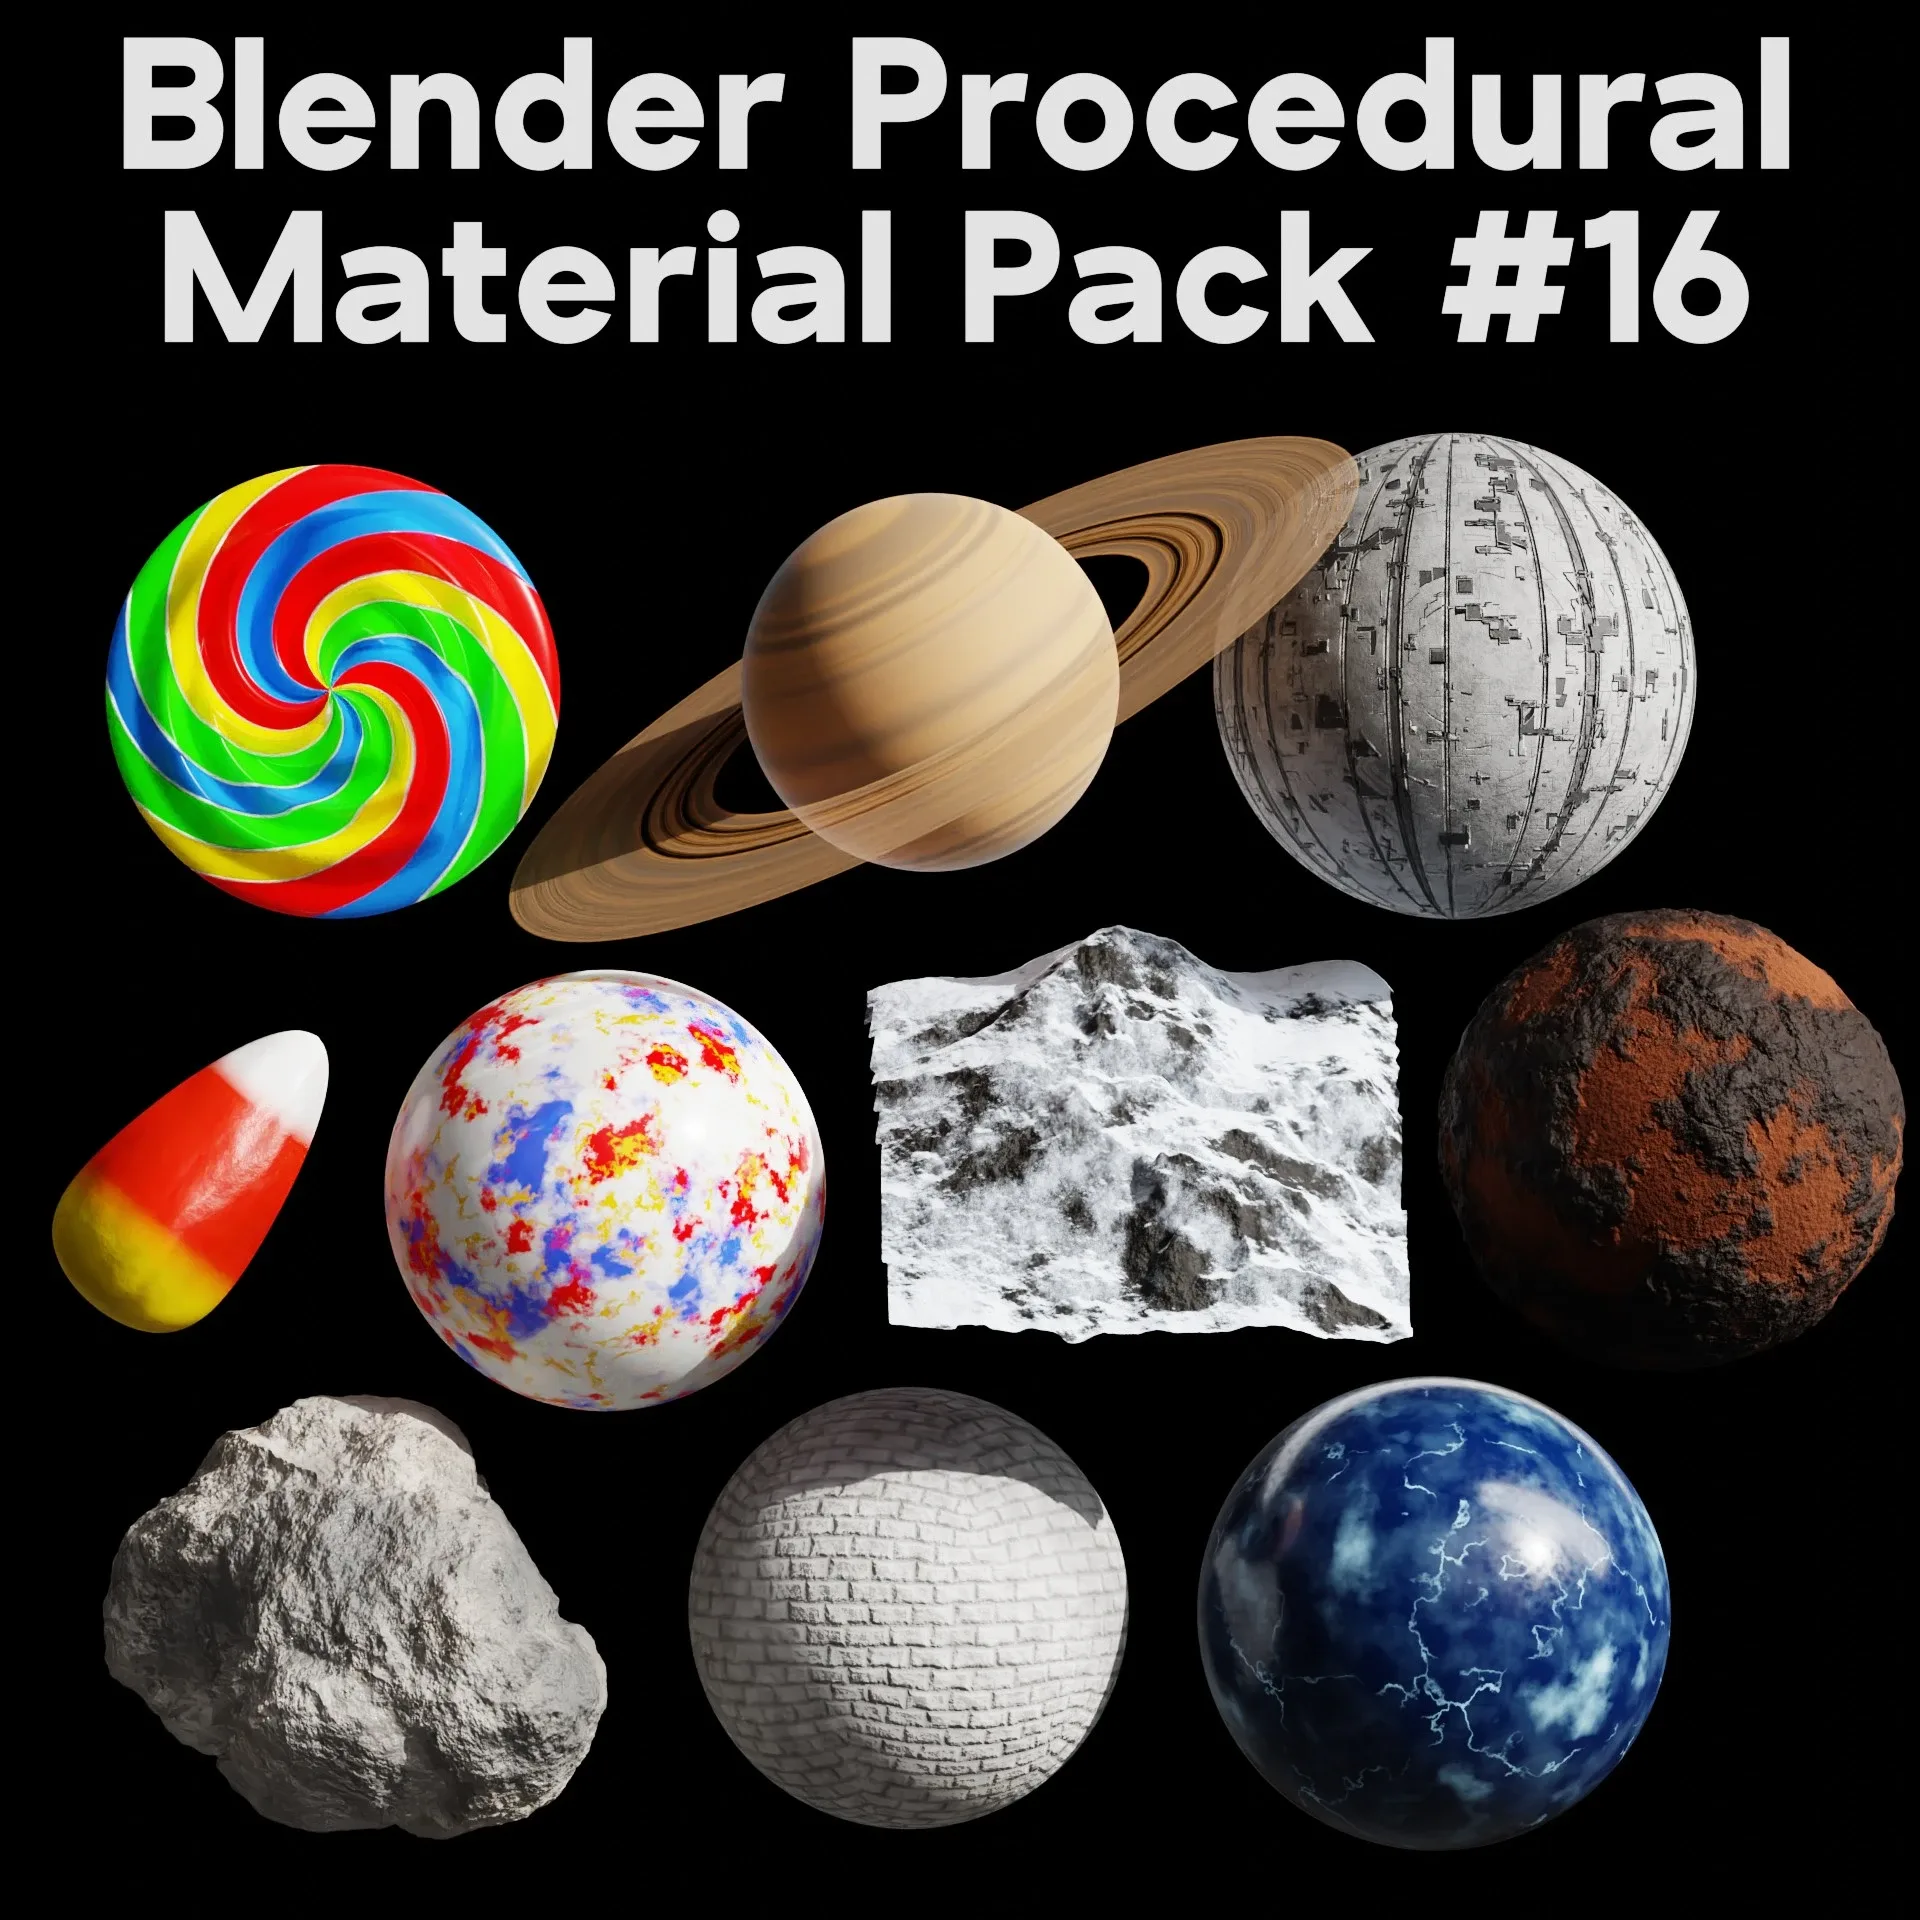 Blender Procedural Material Pack #16